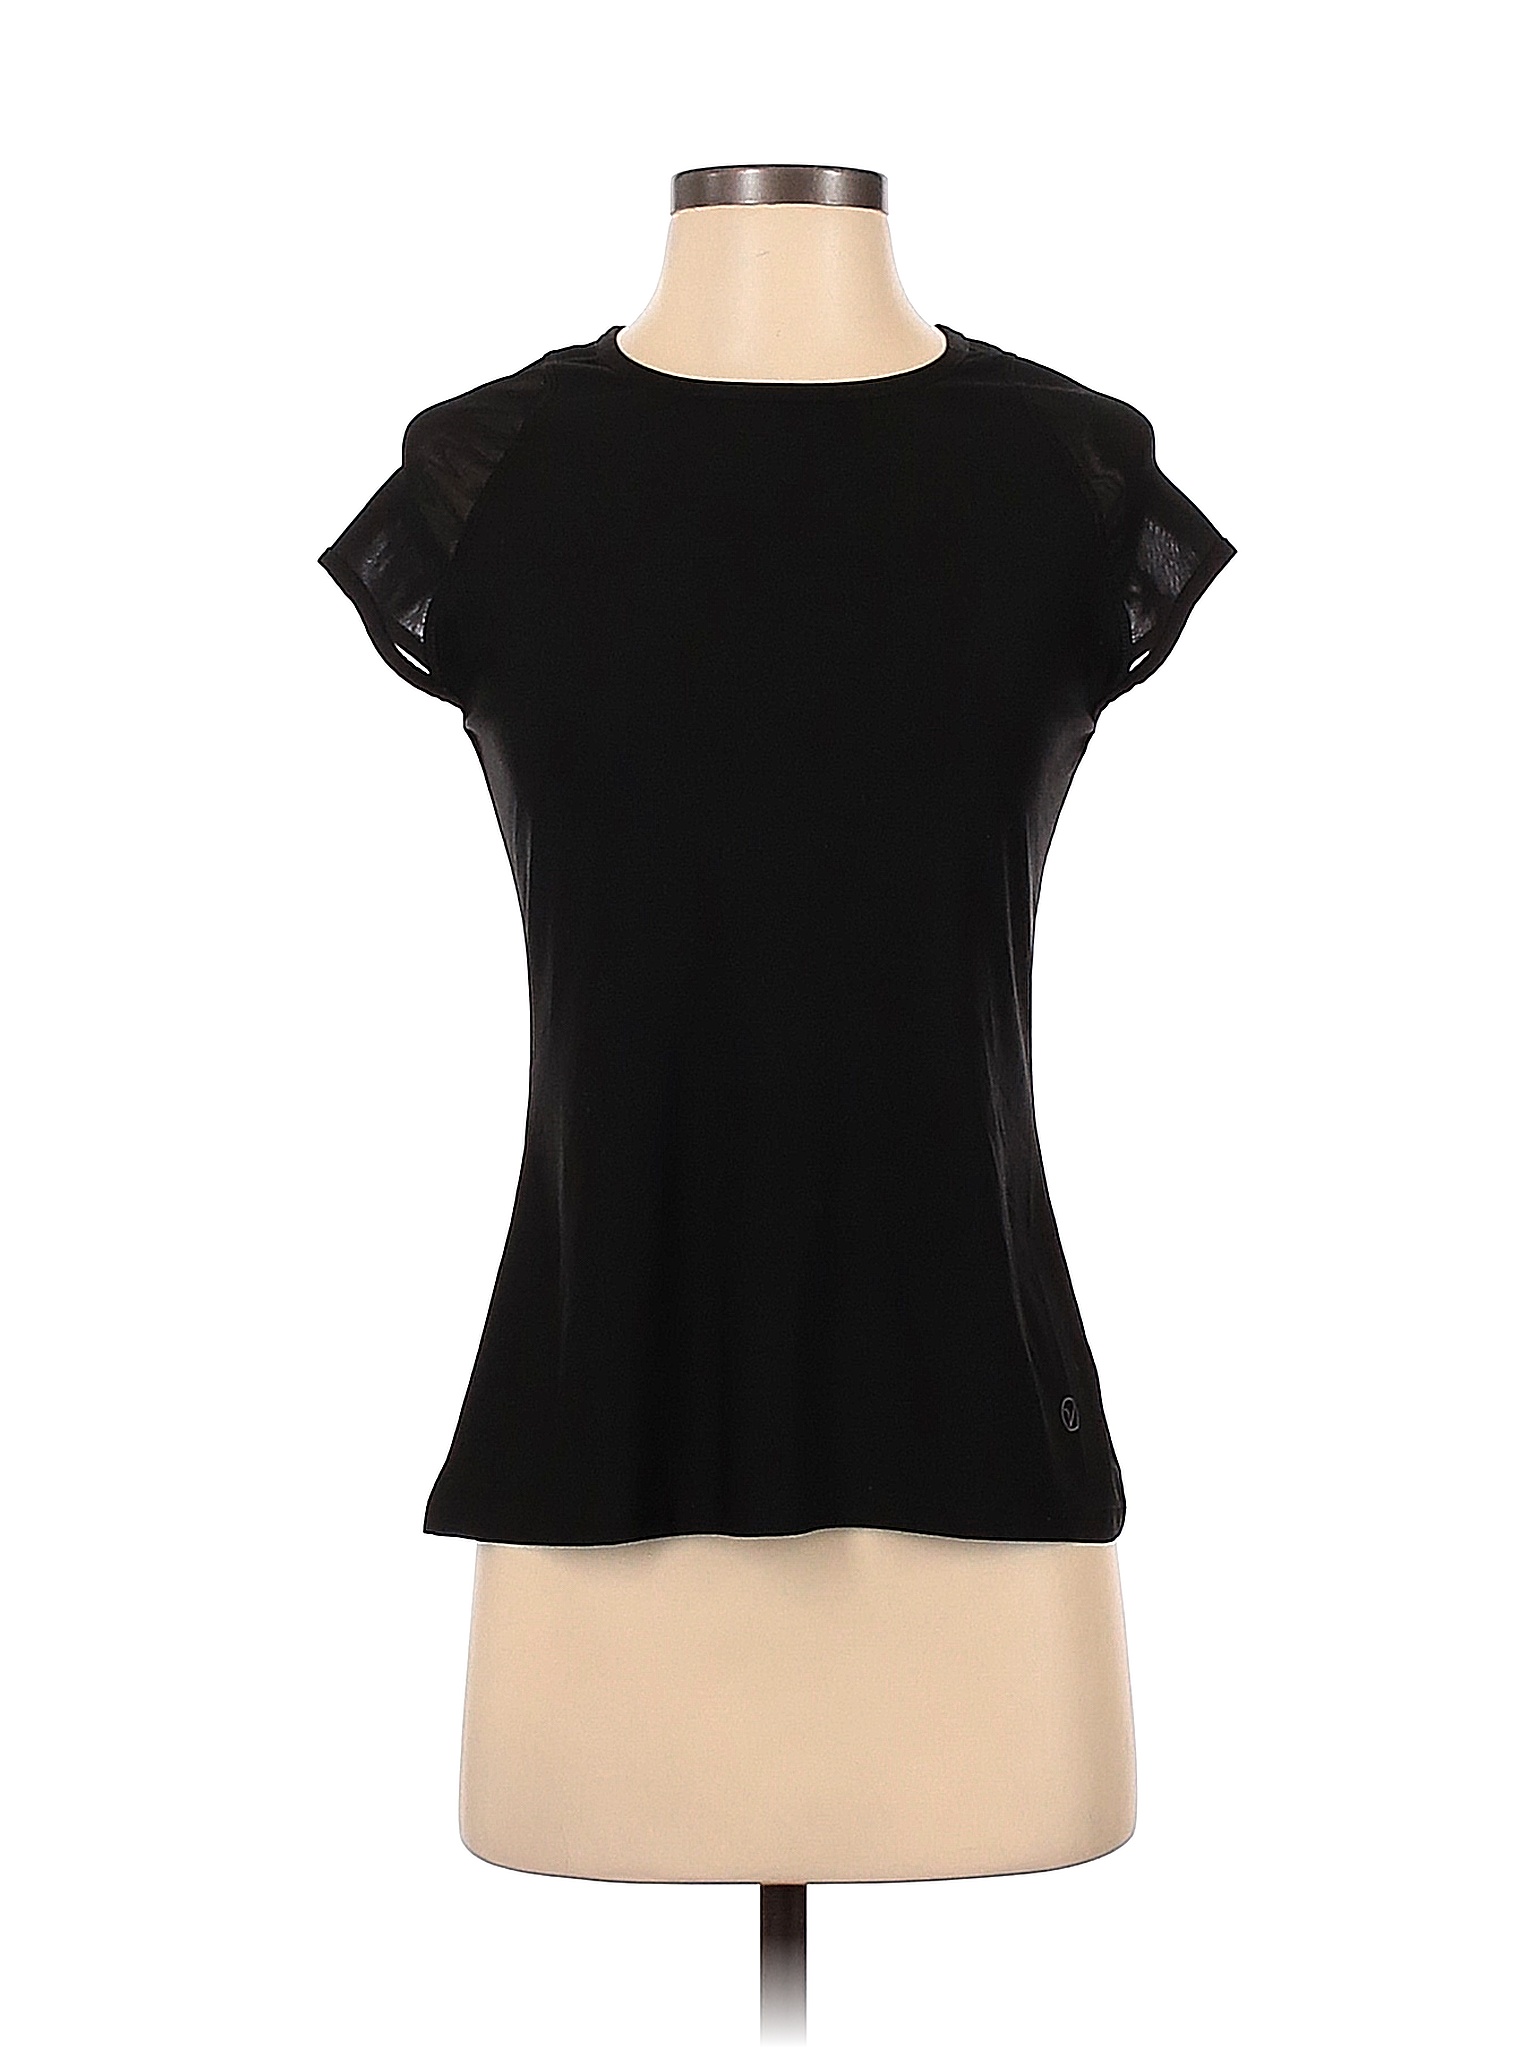 Vogo Polka Dots Black Active T-Shirt Size S - 68% off